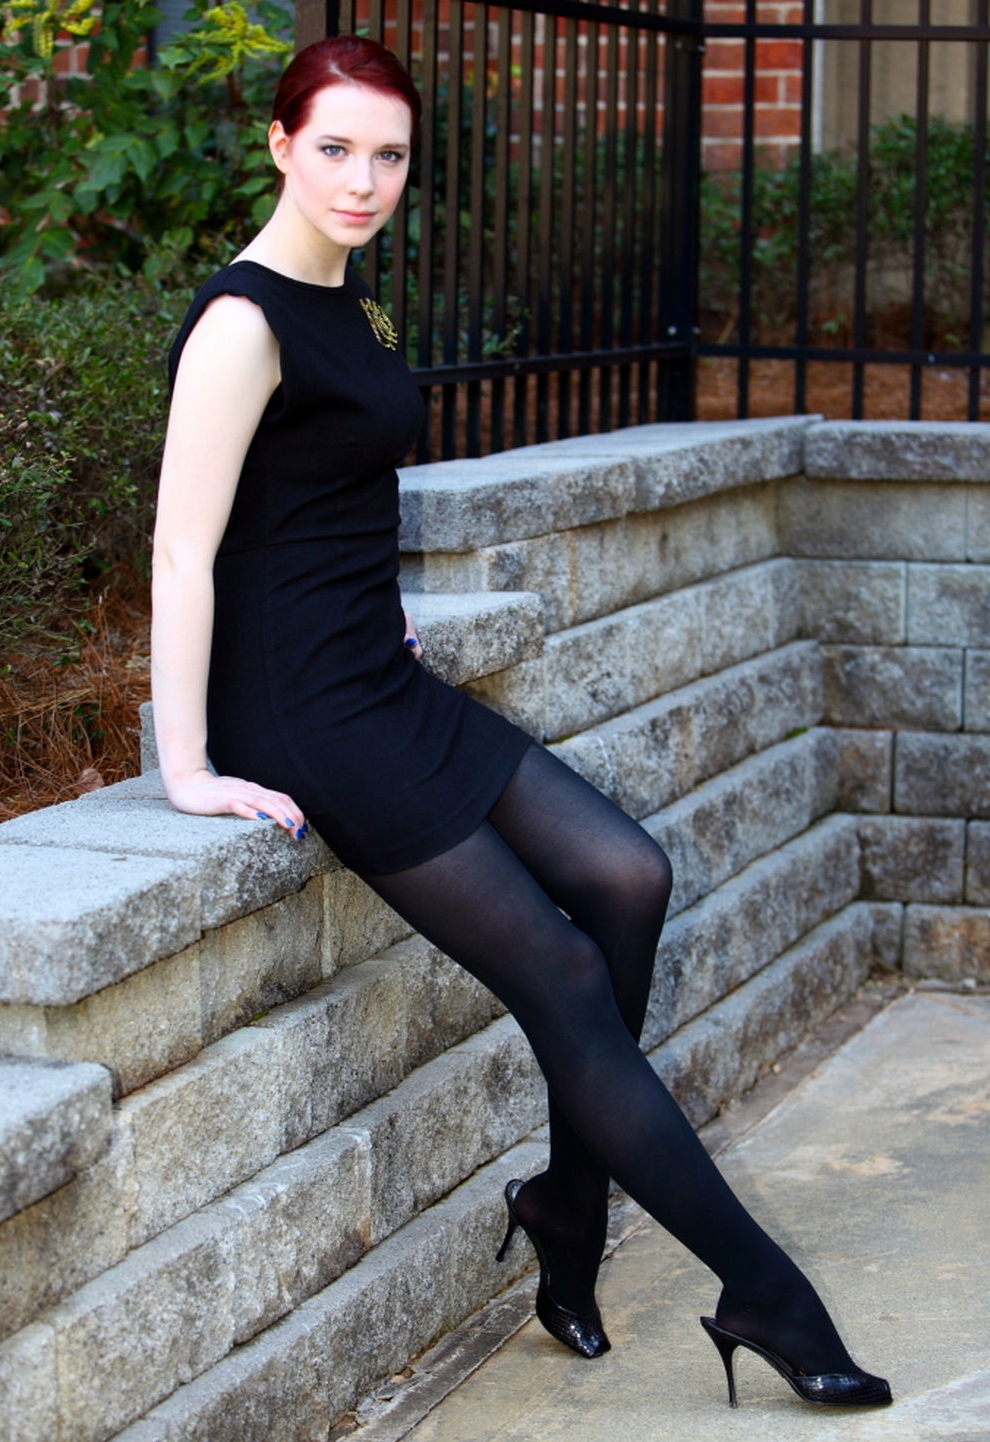 Redhead Teen Girl wearing Black Opaque Pantyhose and Black Cotton Short Dress